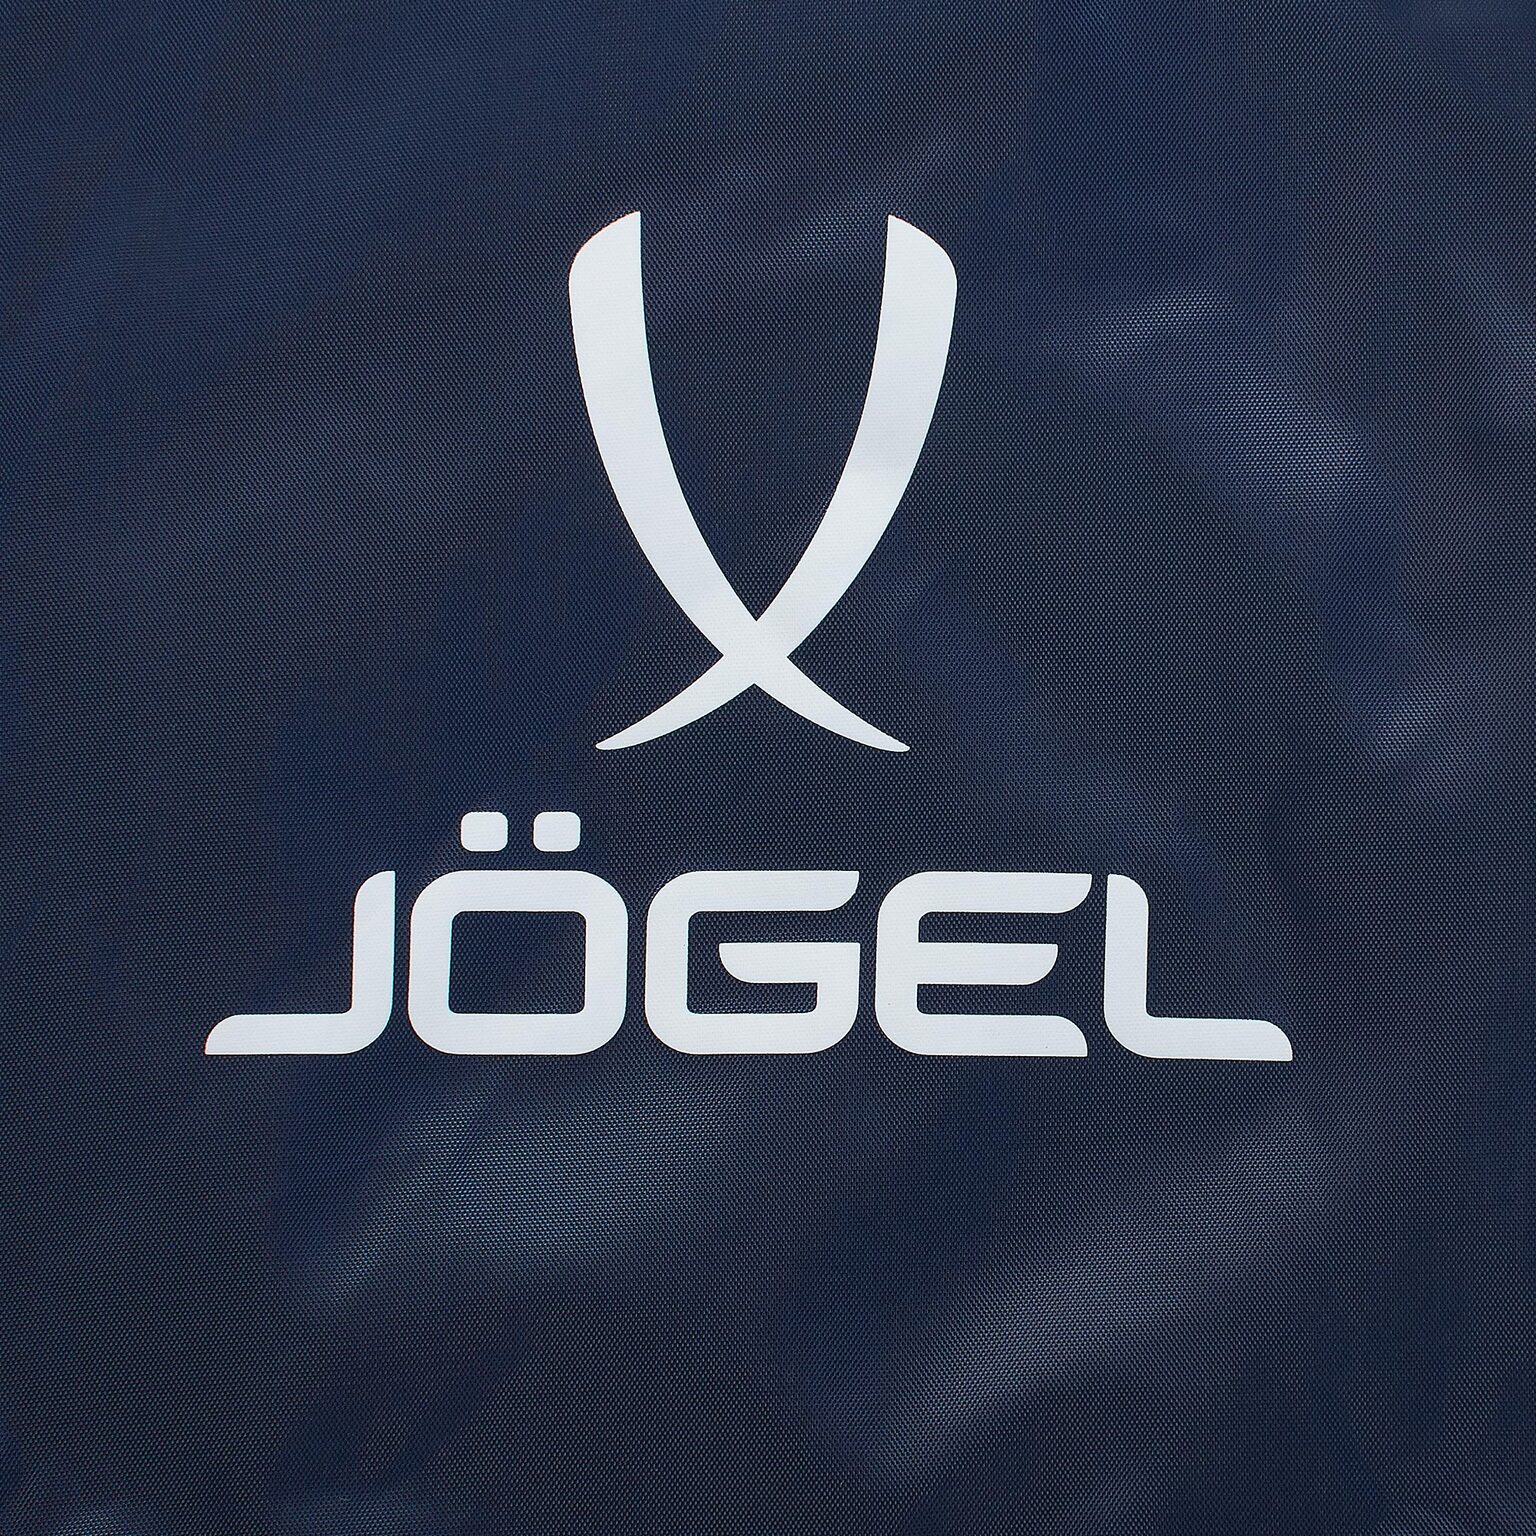 Сумка для обуви Jogel Camp Everyday УТ-00019668